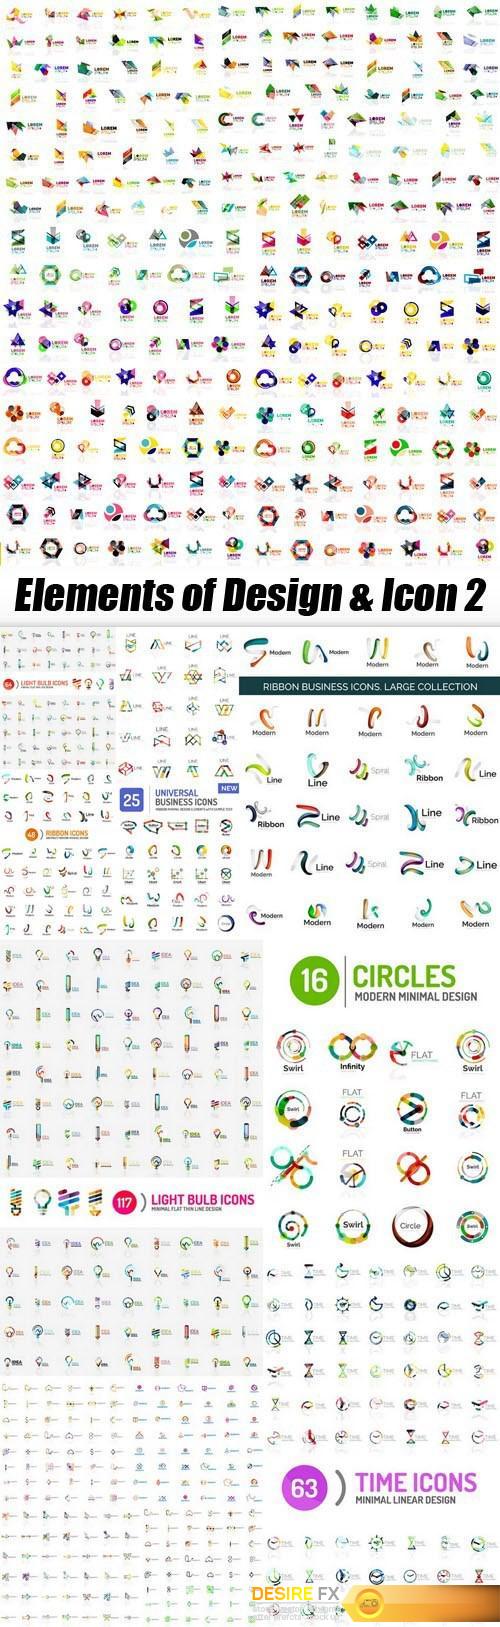 Elements of Design & Icon 2